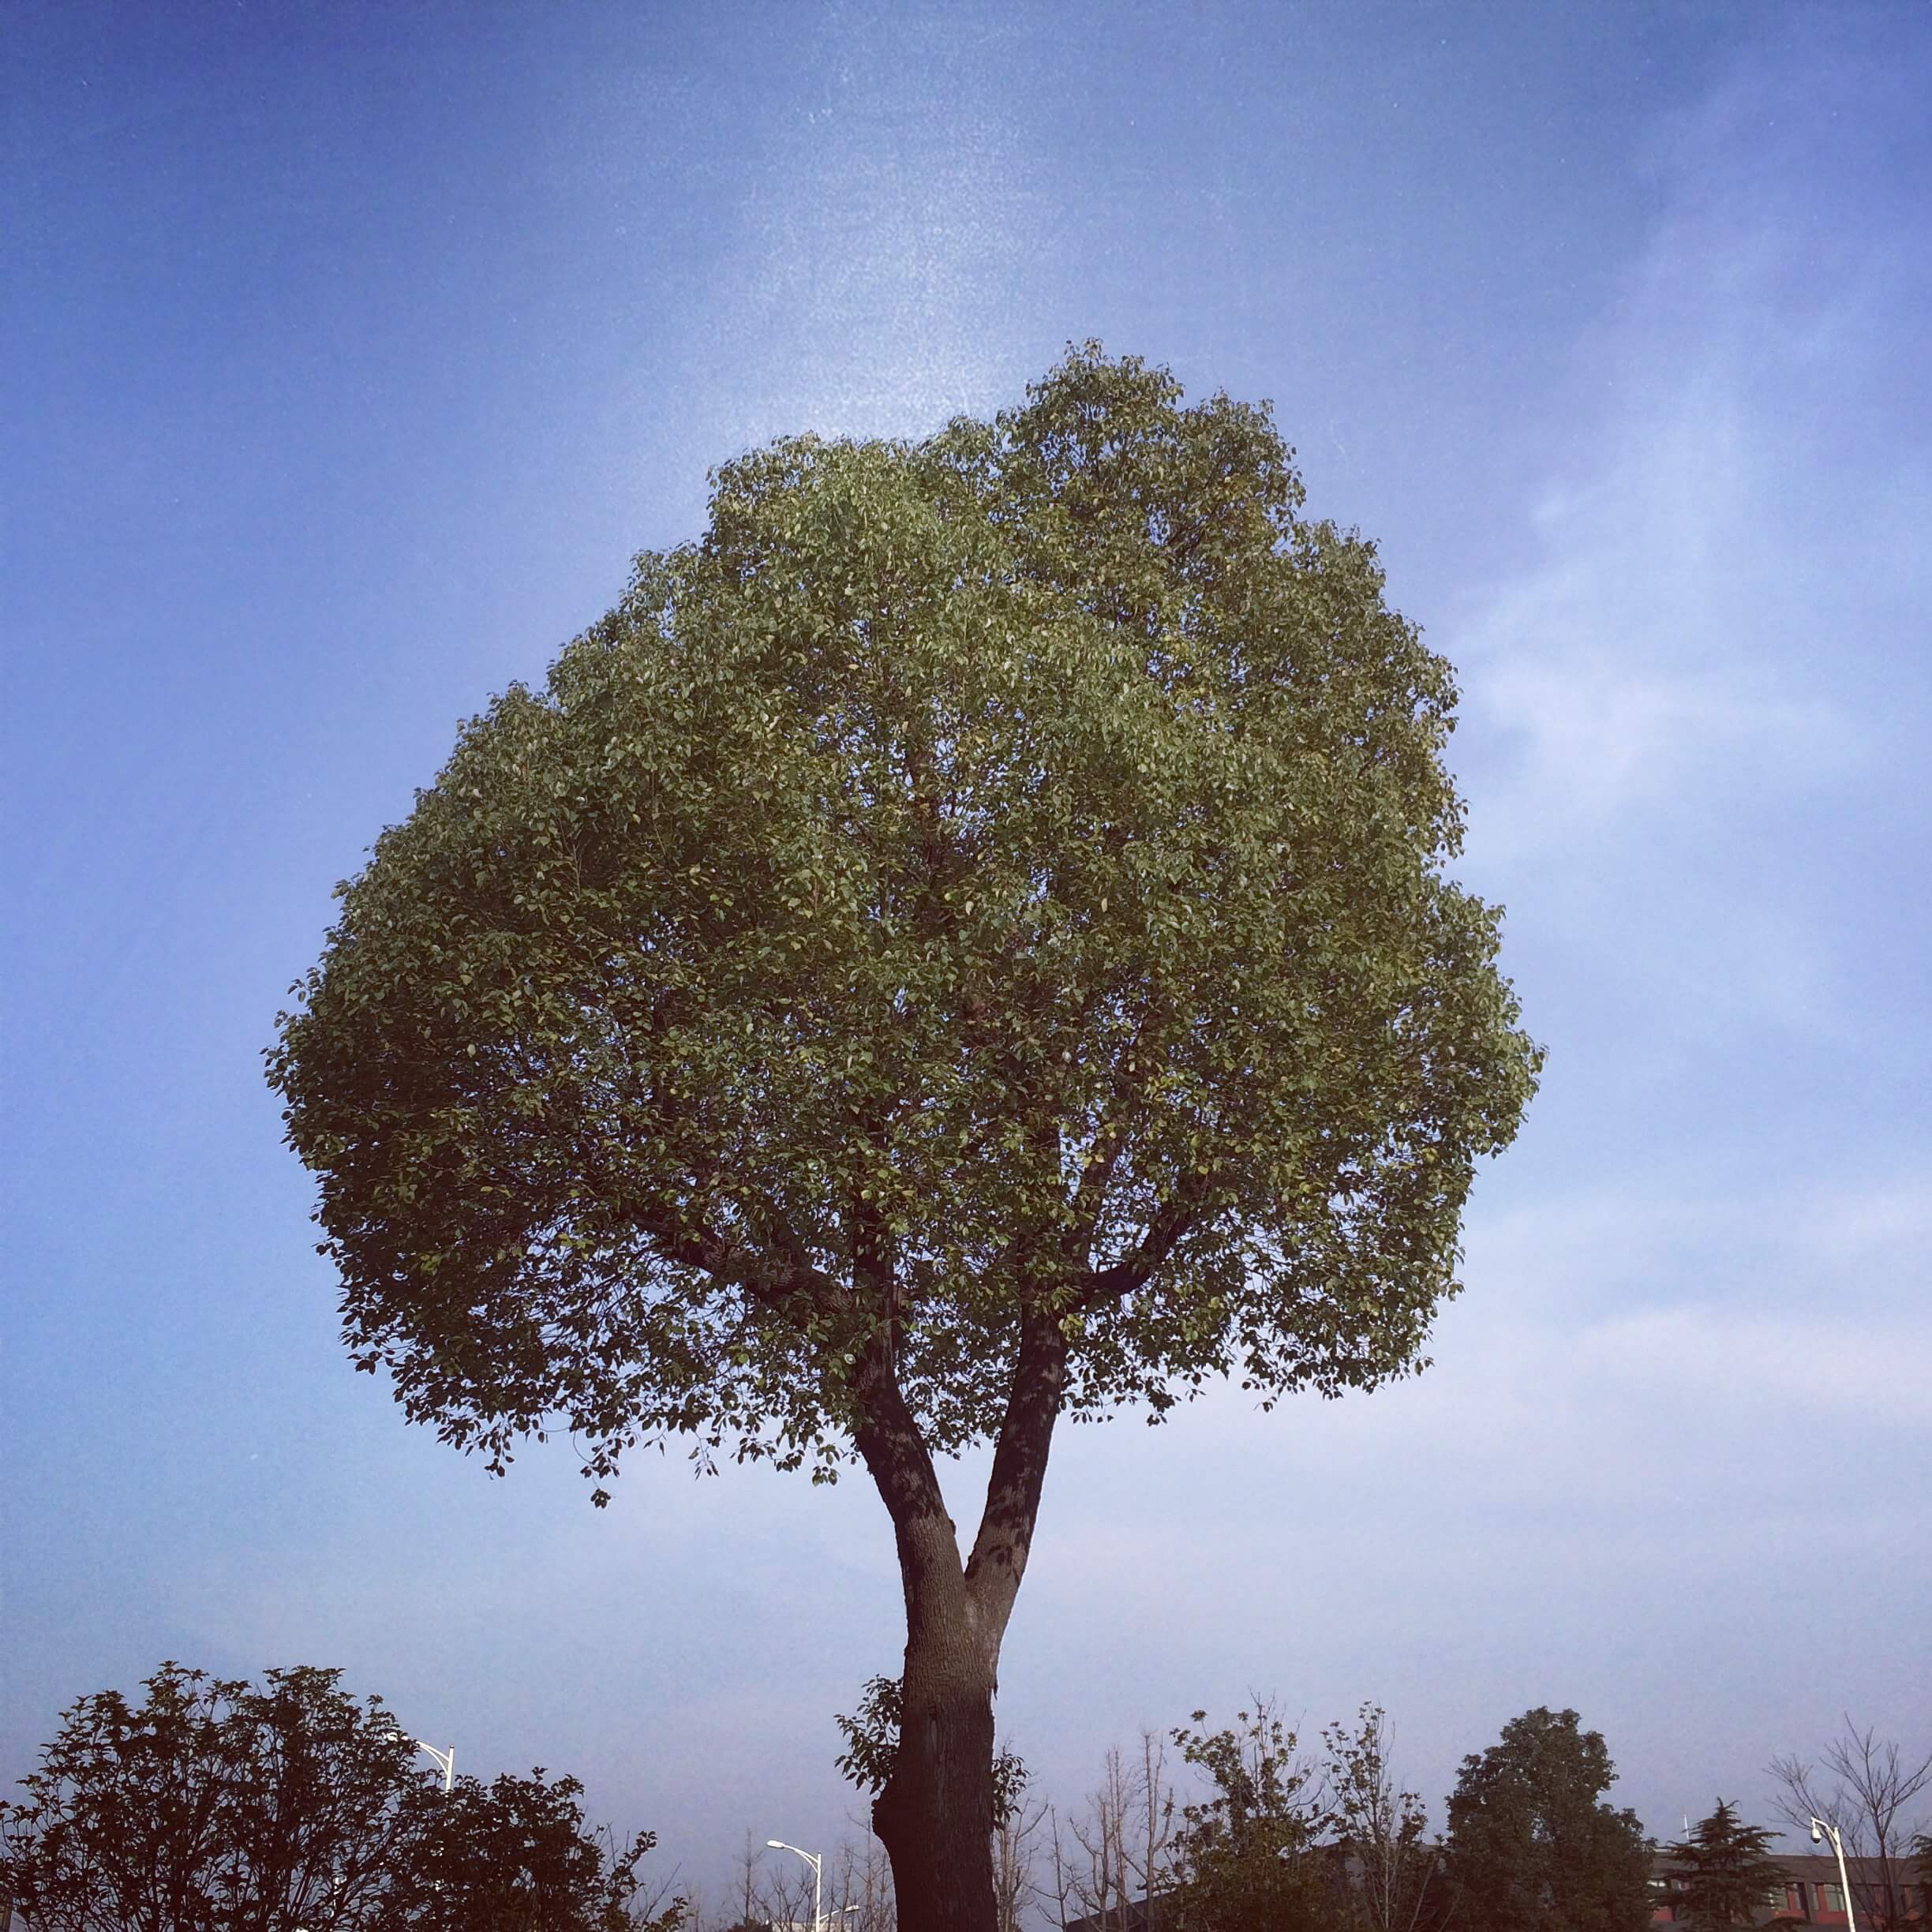 arbor-day-tree